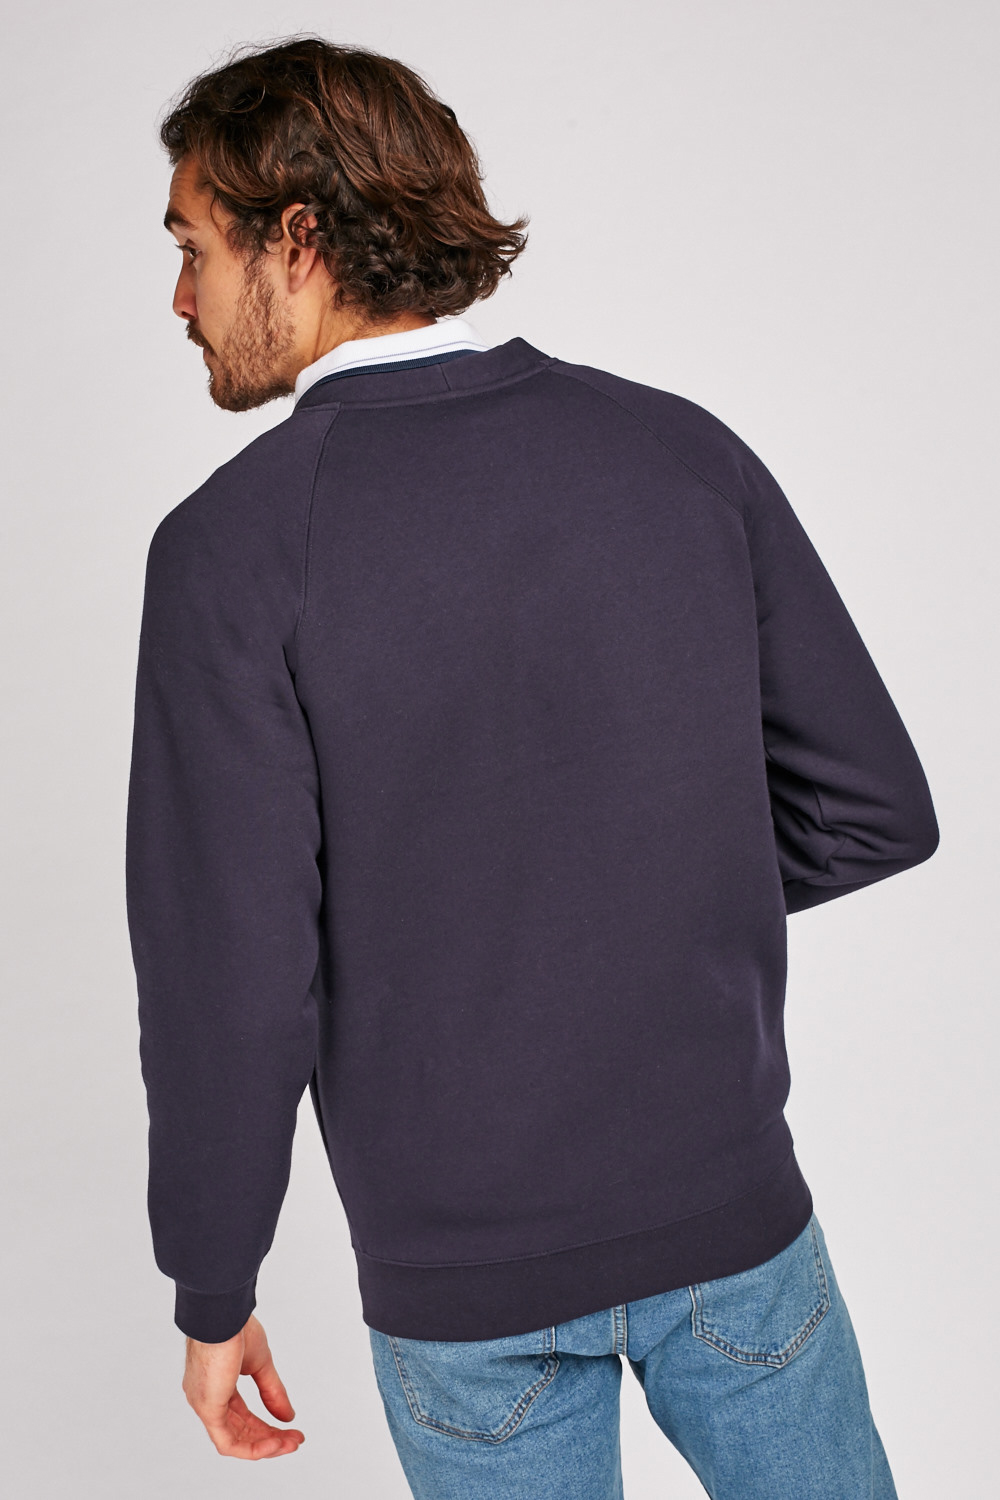 Sweatshirt Style Cardigan - Just $7